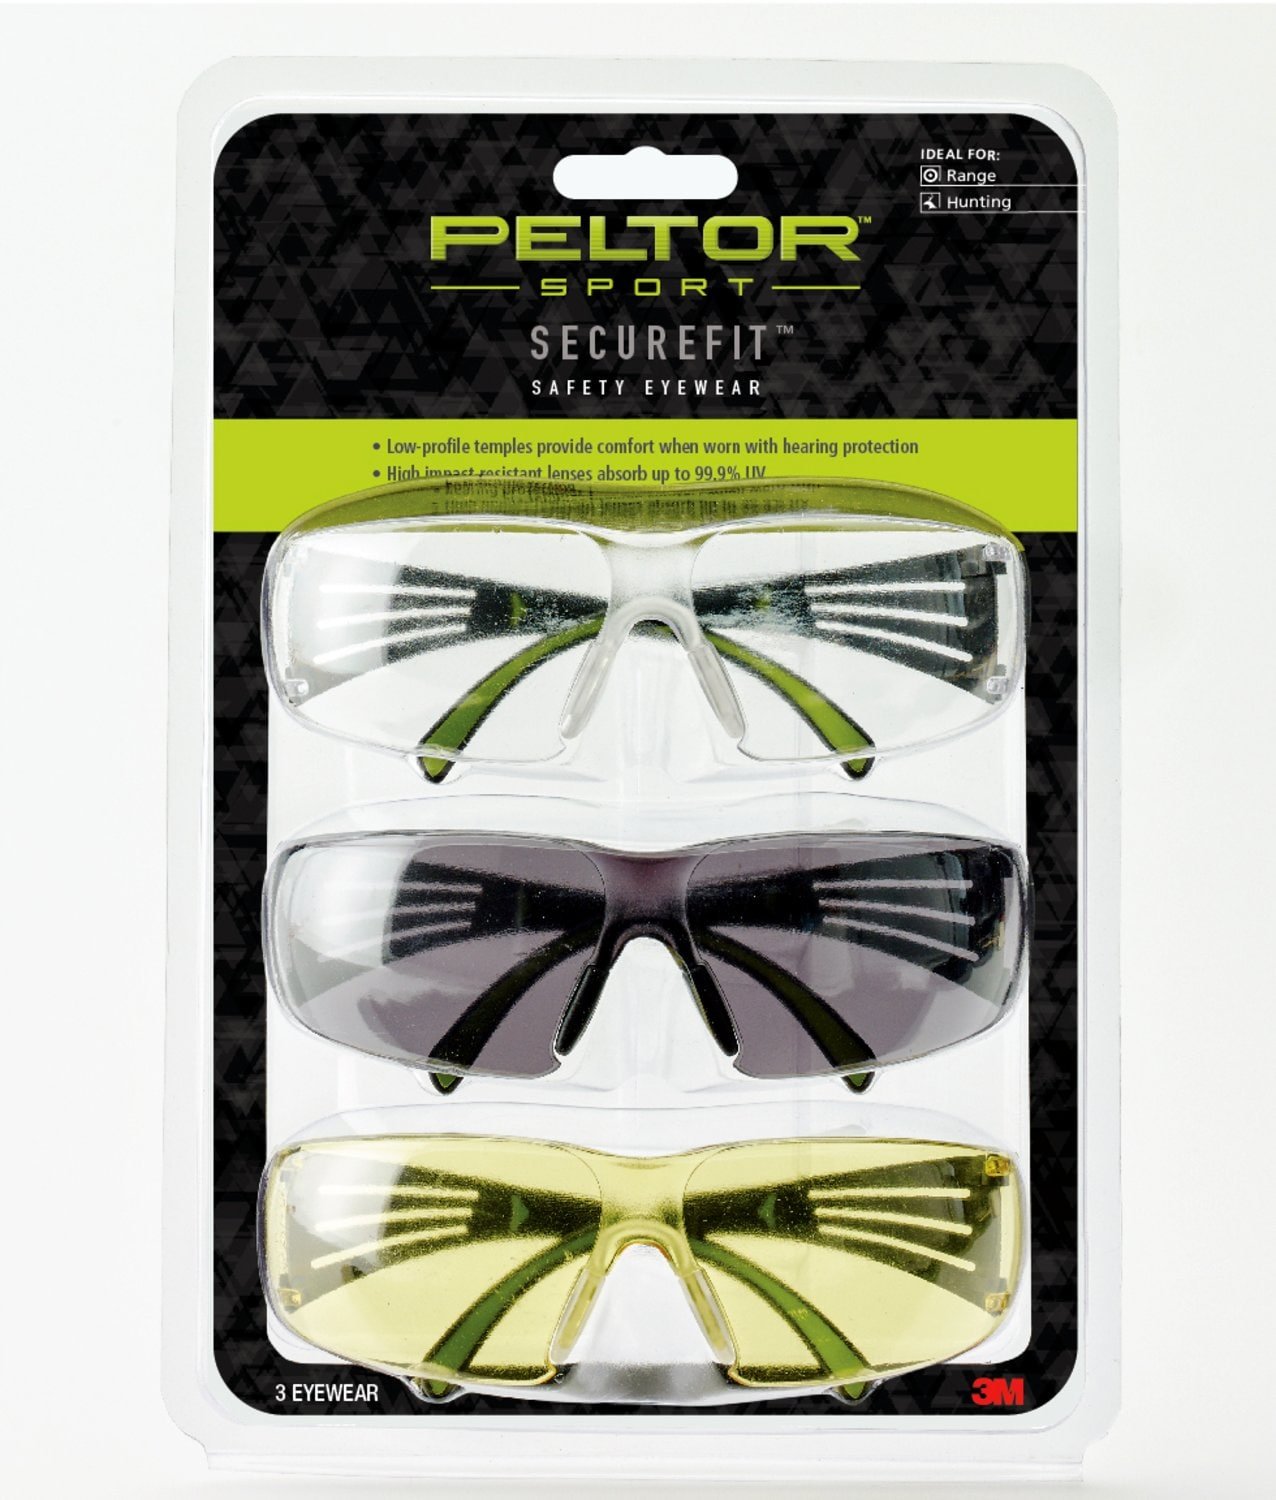 7100130341 - Peltor Sport SecureFit Safety Eyewear, SF400-P3PK-6, 3 Pack: Clear +
Amber + Gray Lenses, AF, 6pk/cs